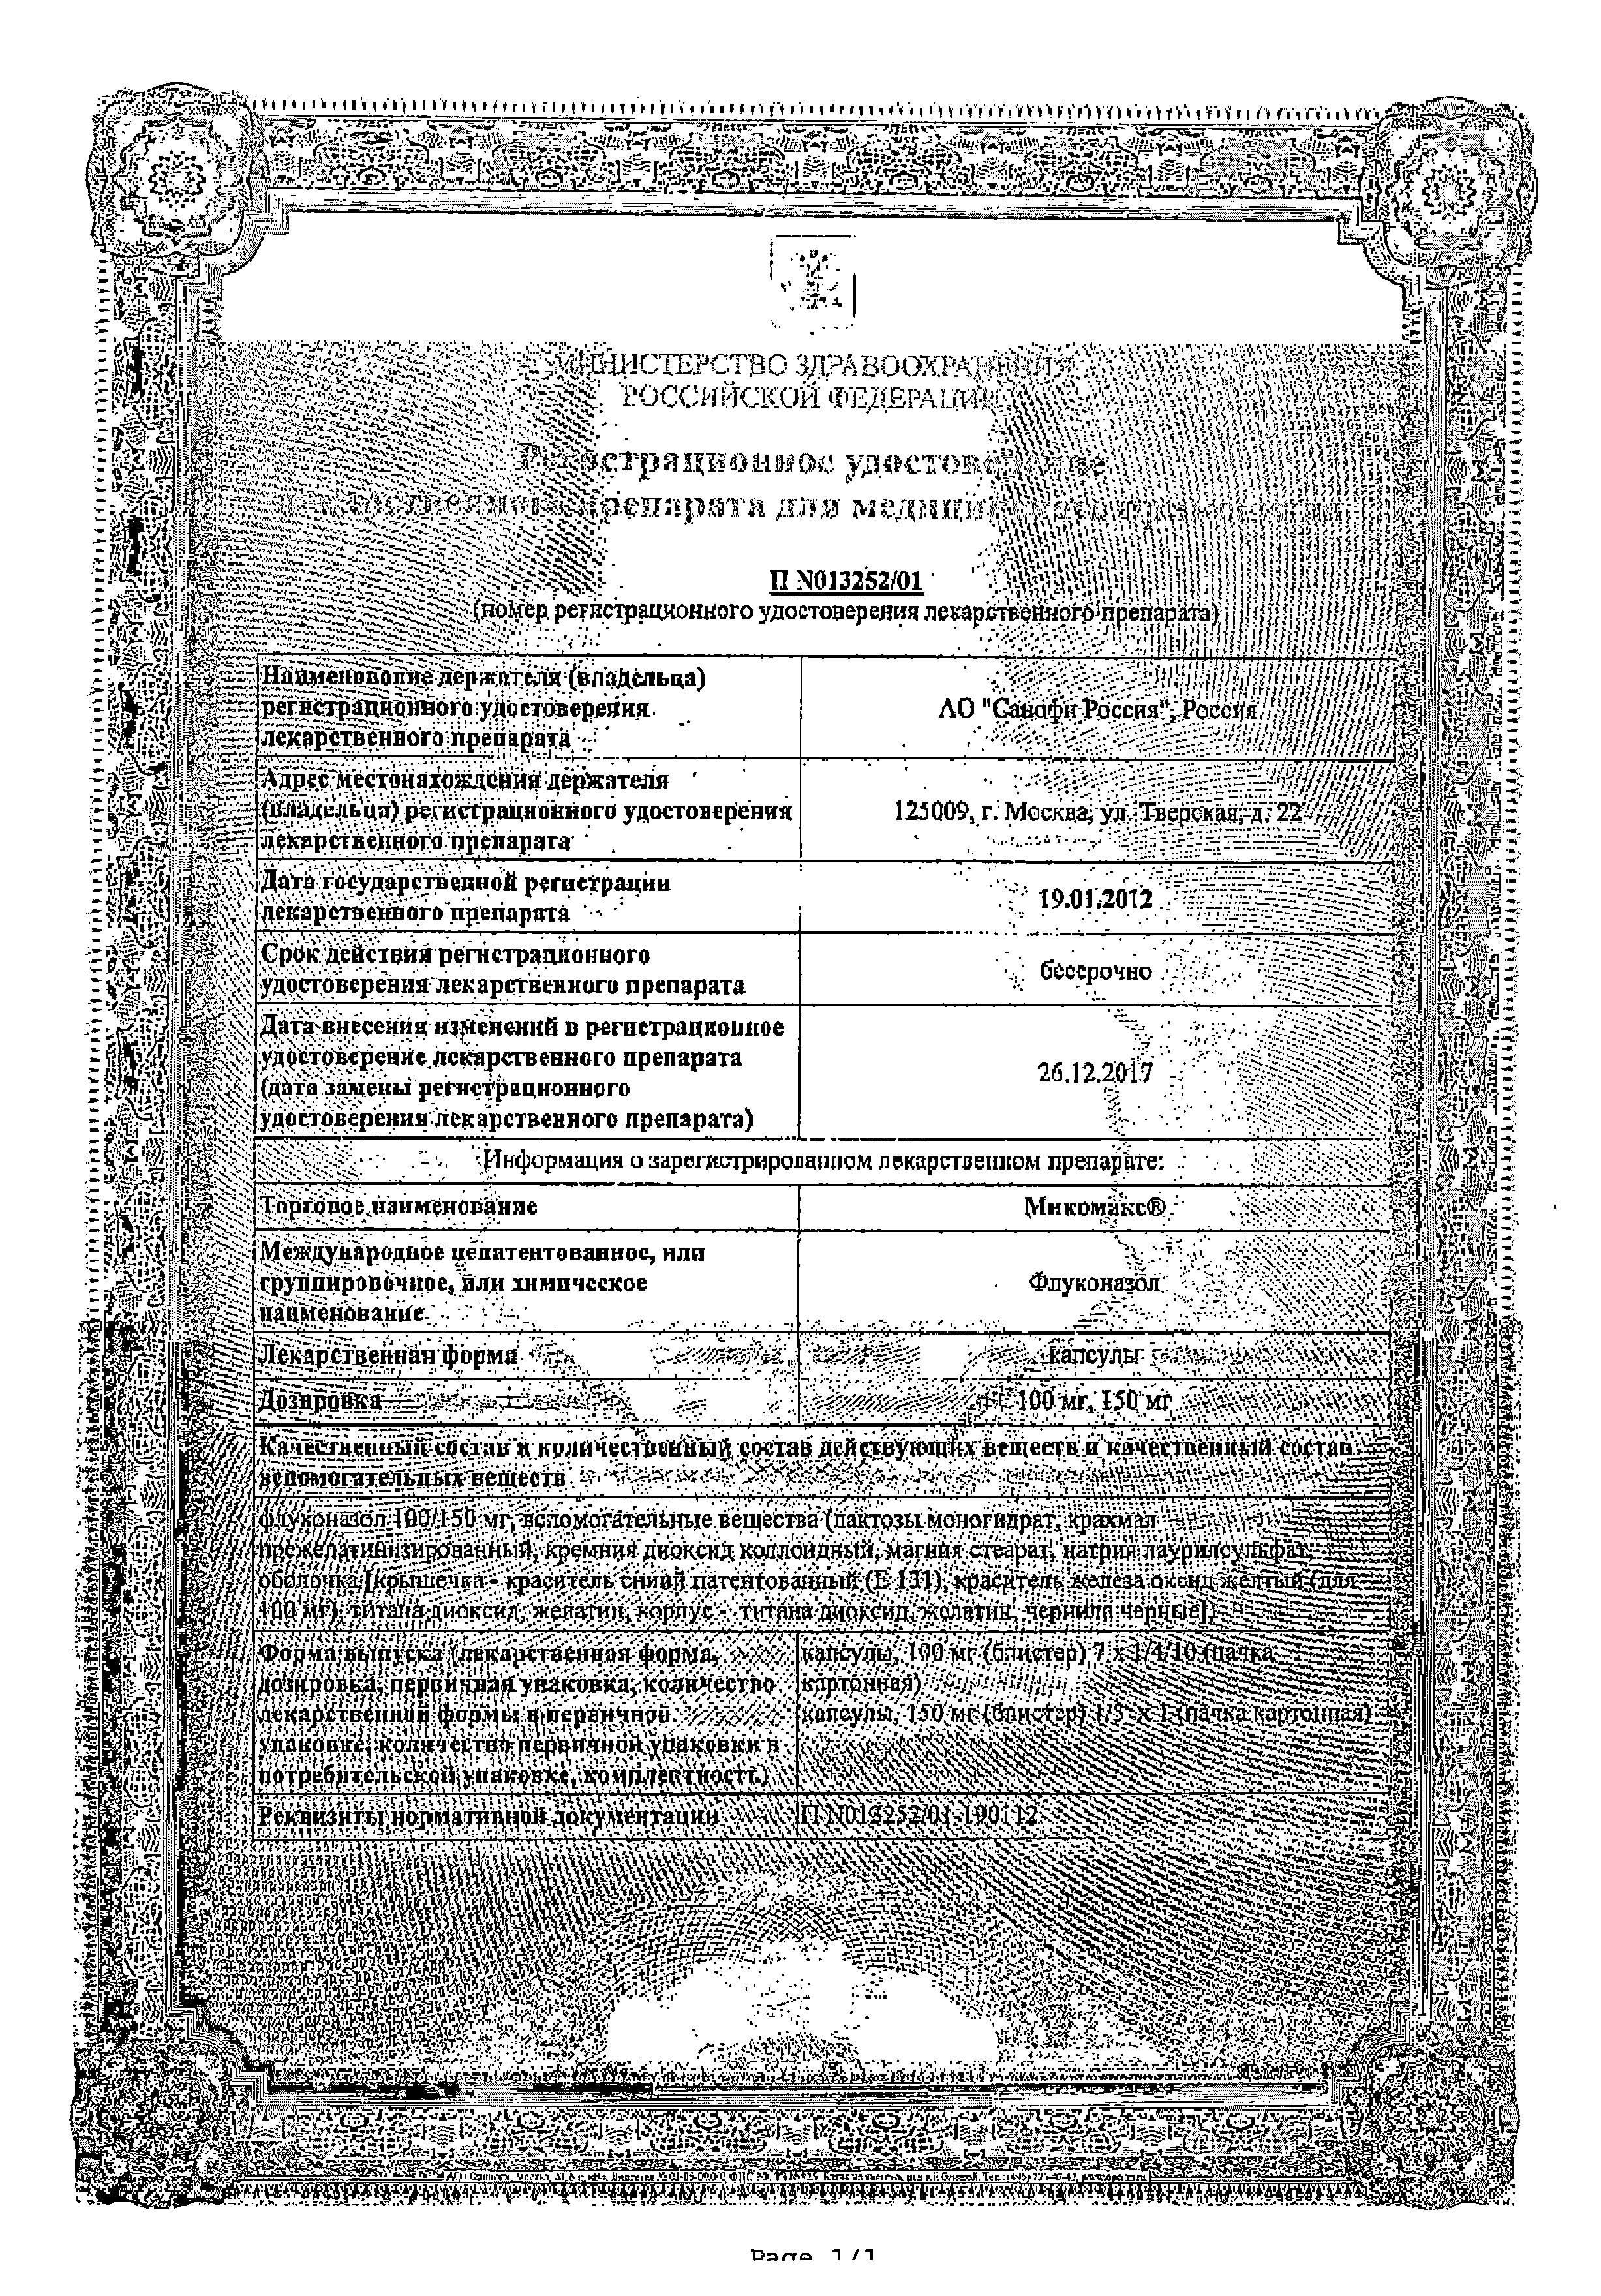 Микомакс сертификат